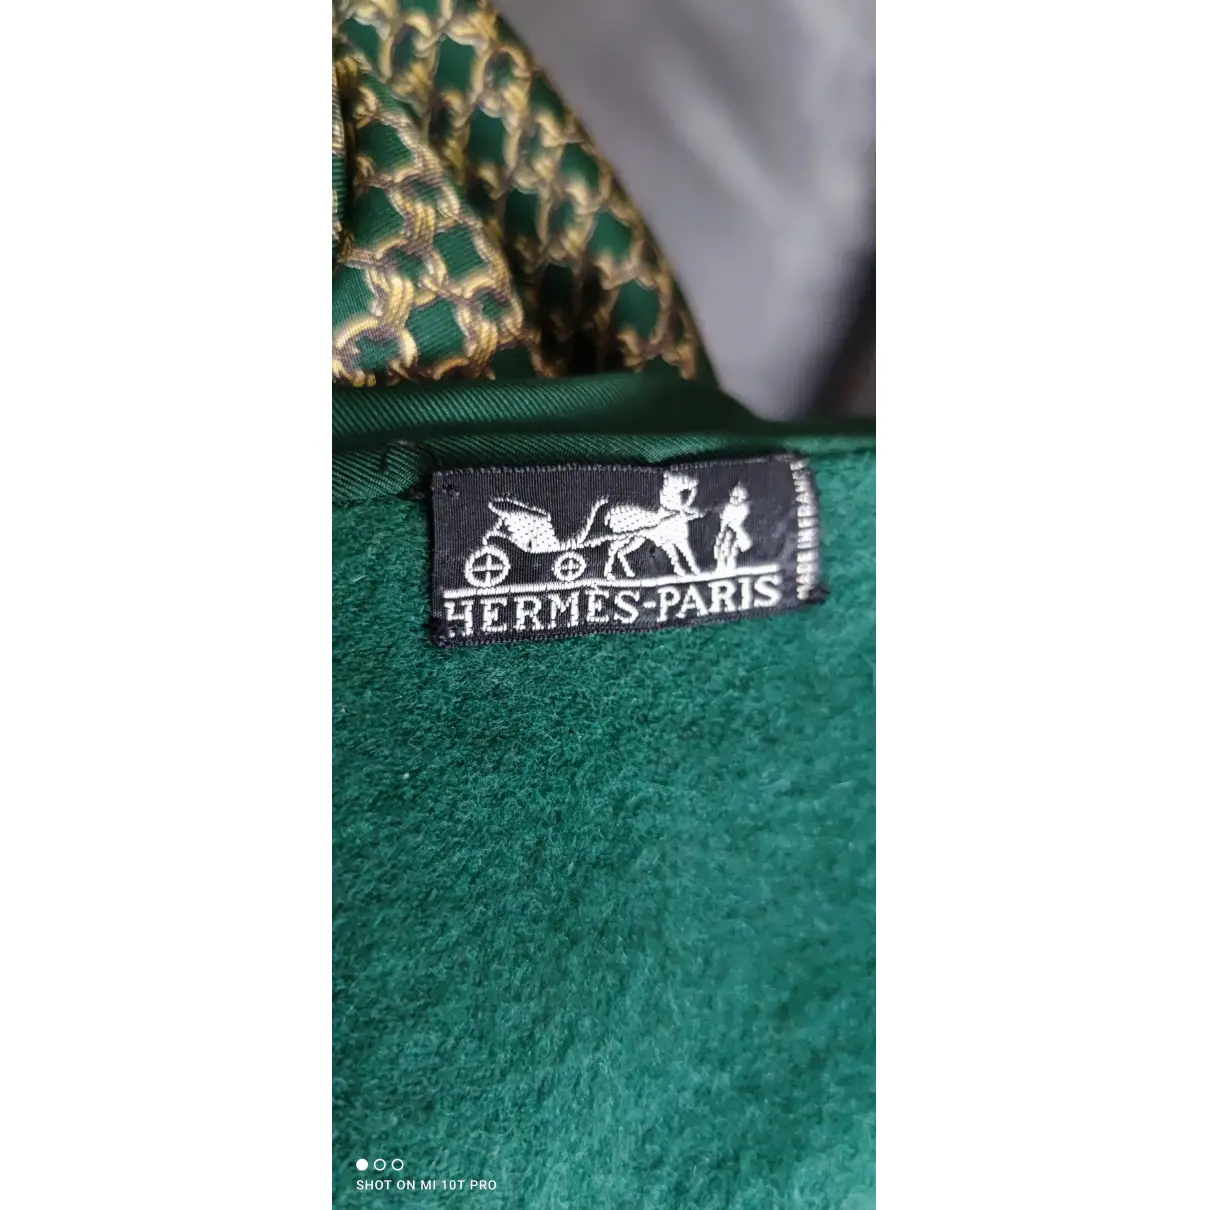 Buy Hermès Silk scarf & pocket square online